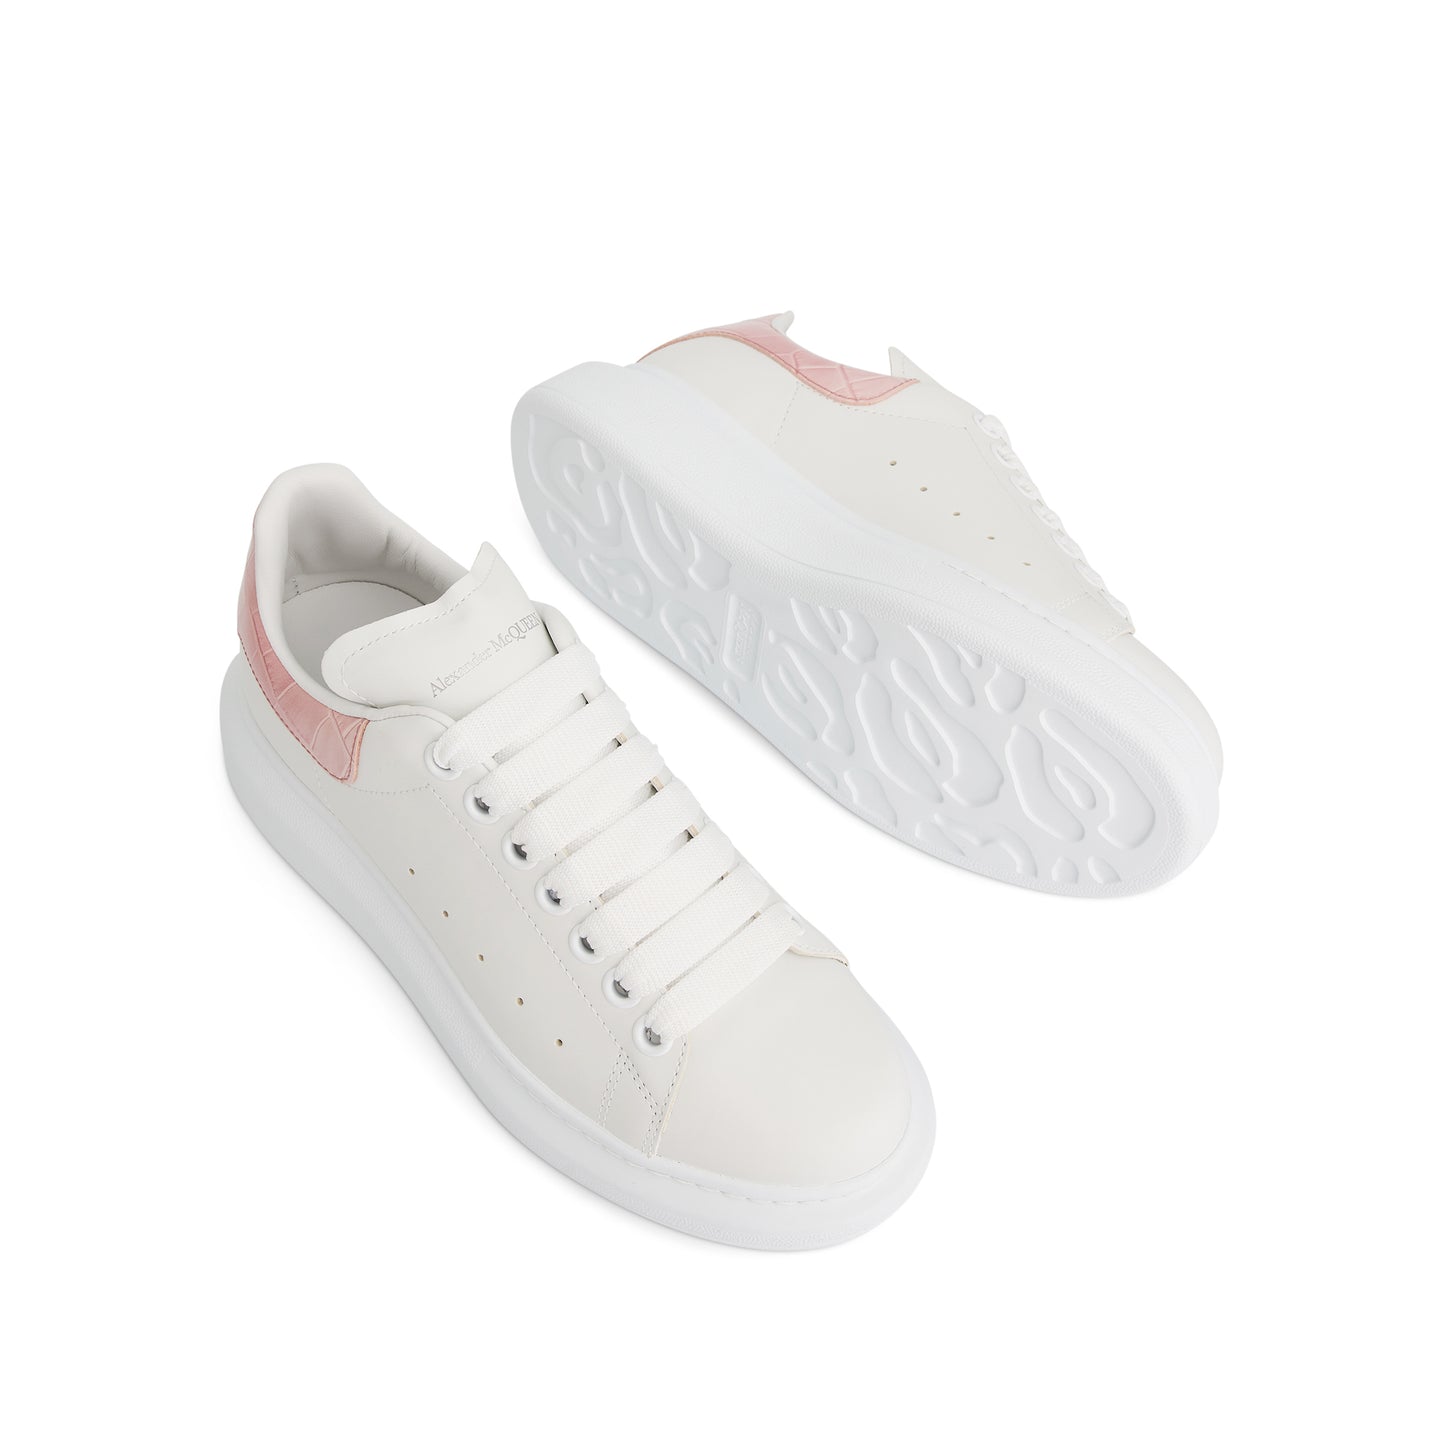 Larry Oversized Sneaker in White/Light Clay